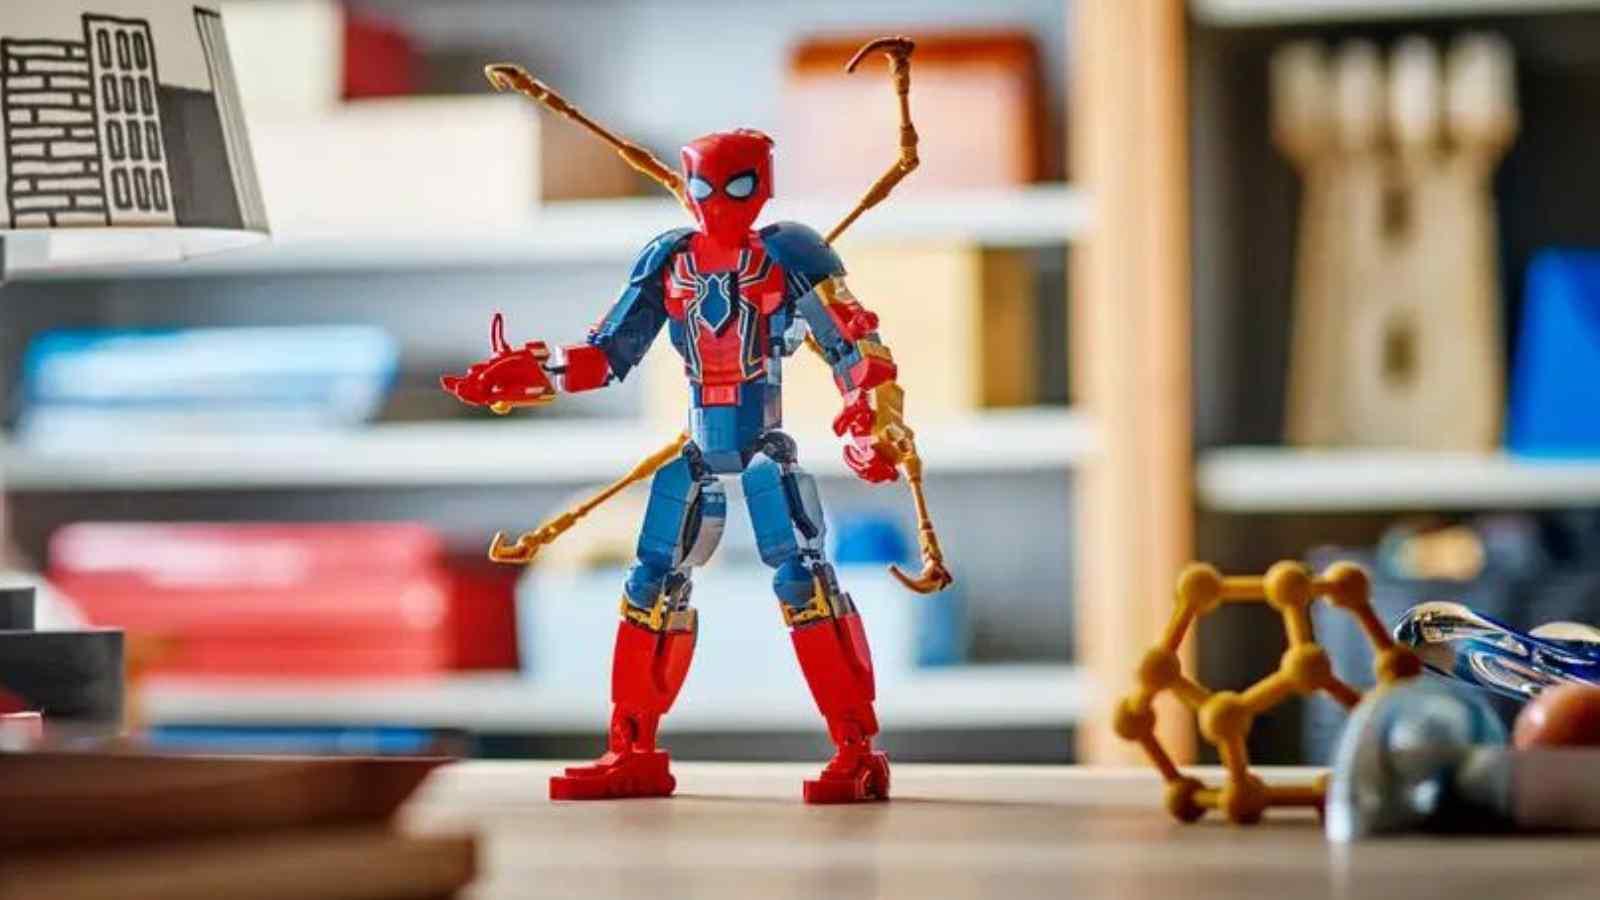 The LEGO Marvel Iron Spider-Man Construction Figure on display